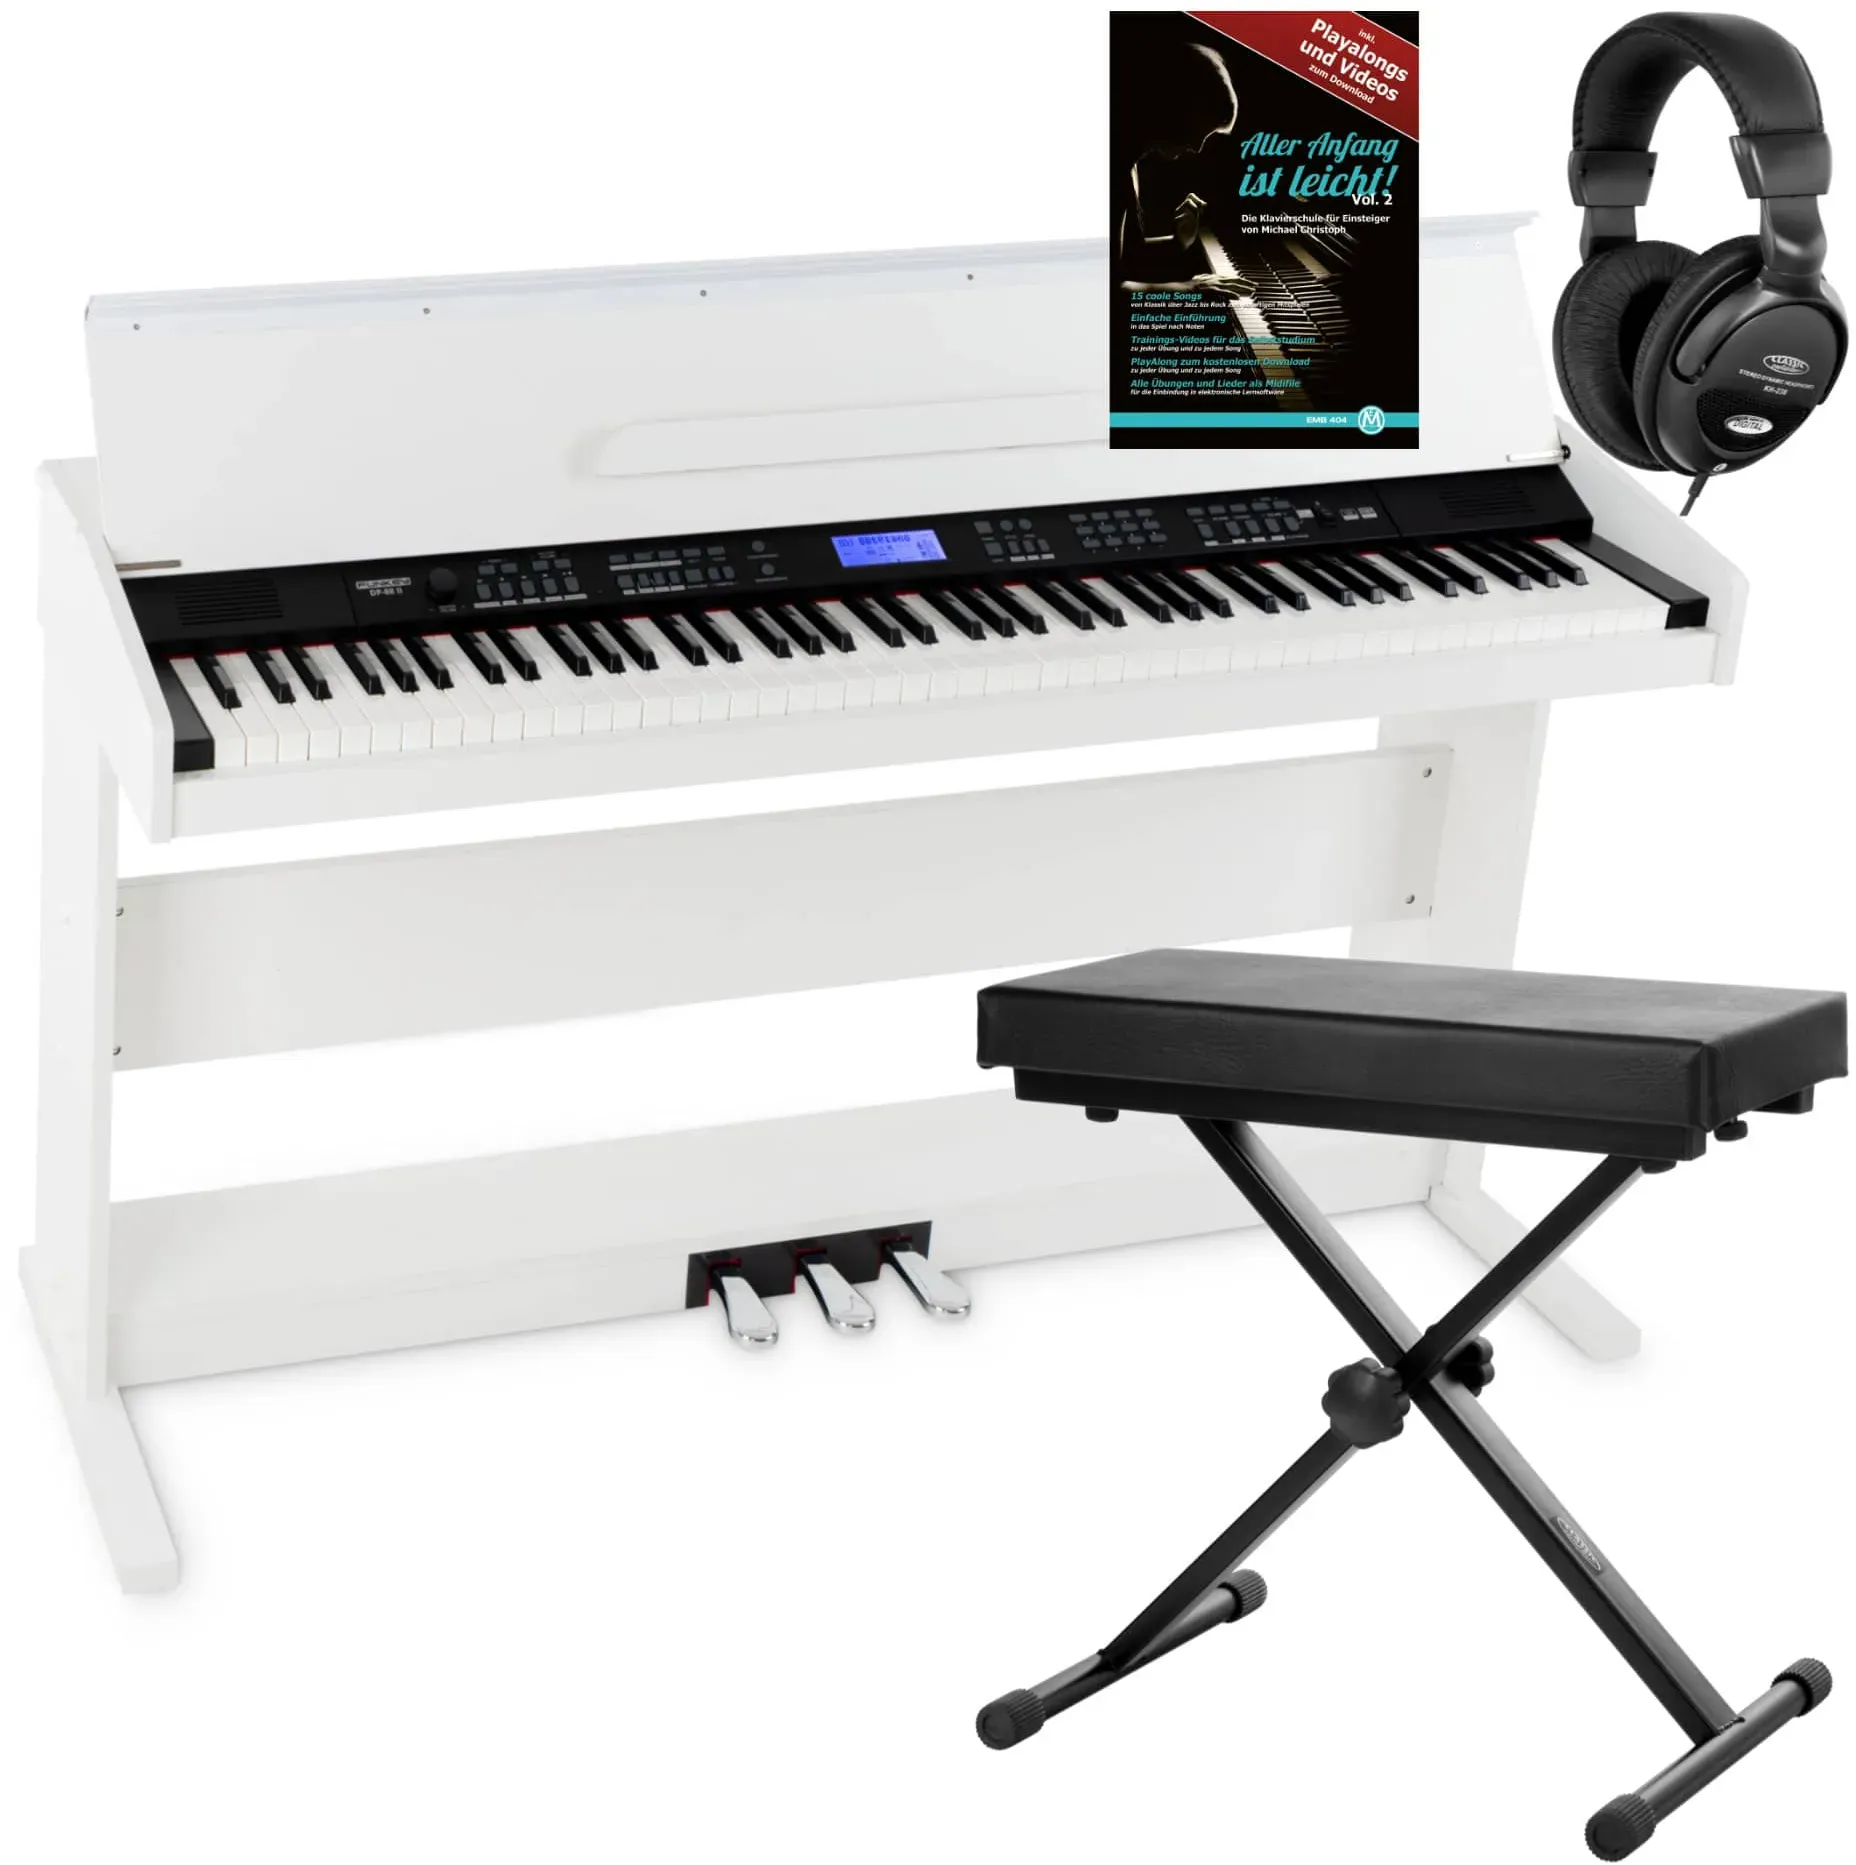 FunKey DP-88 II Digitalpiano weiß Set mit Keyboardbank, Kopfhörer und Klavierschule